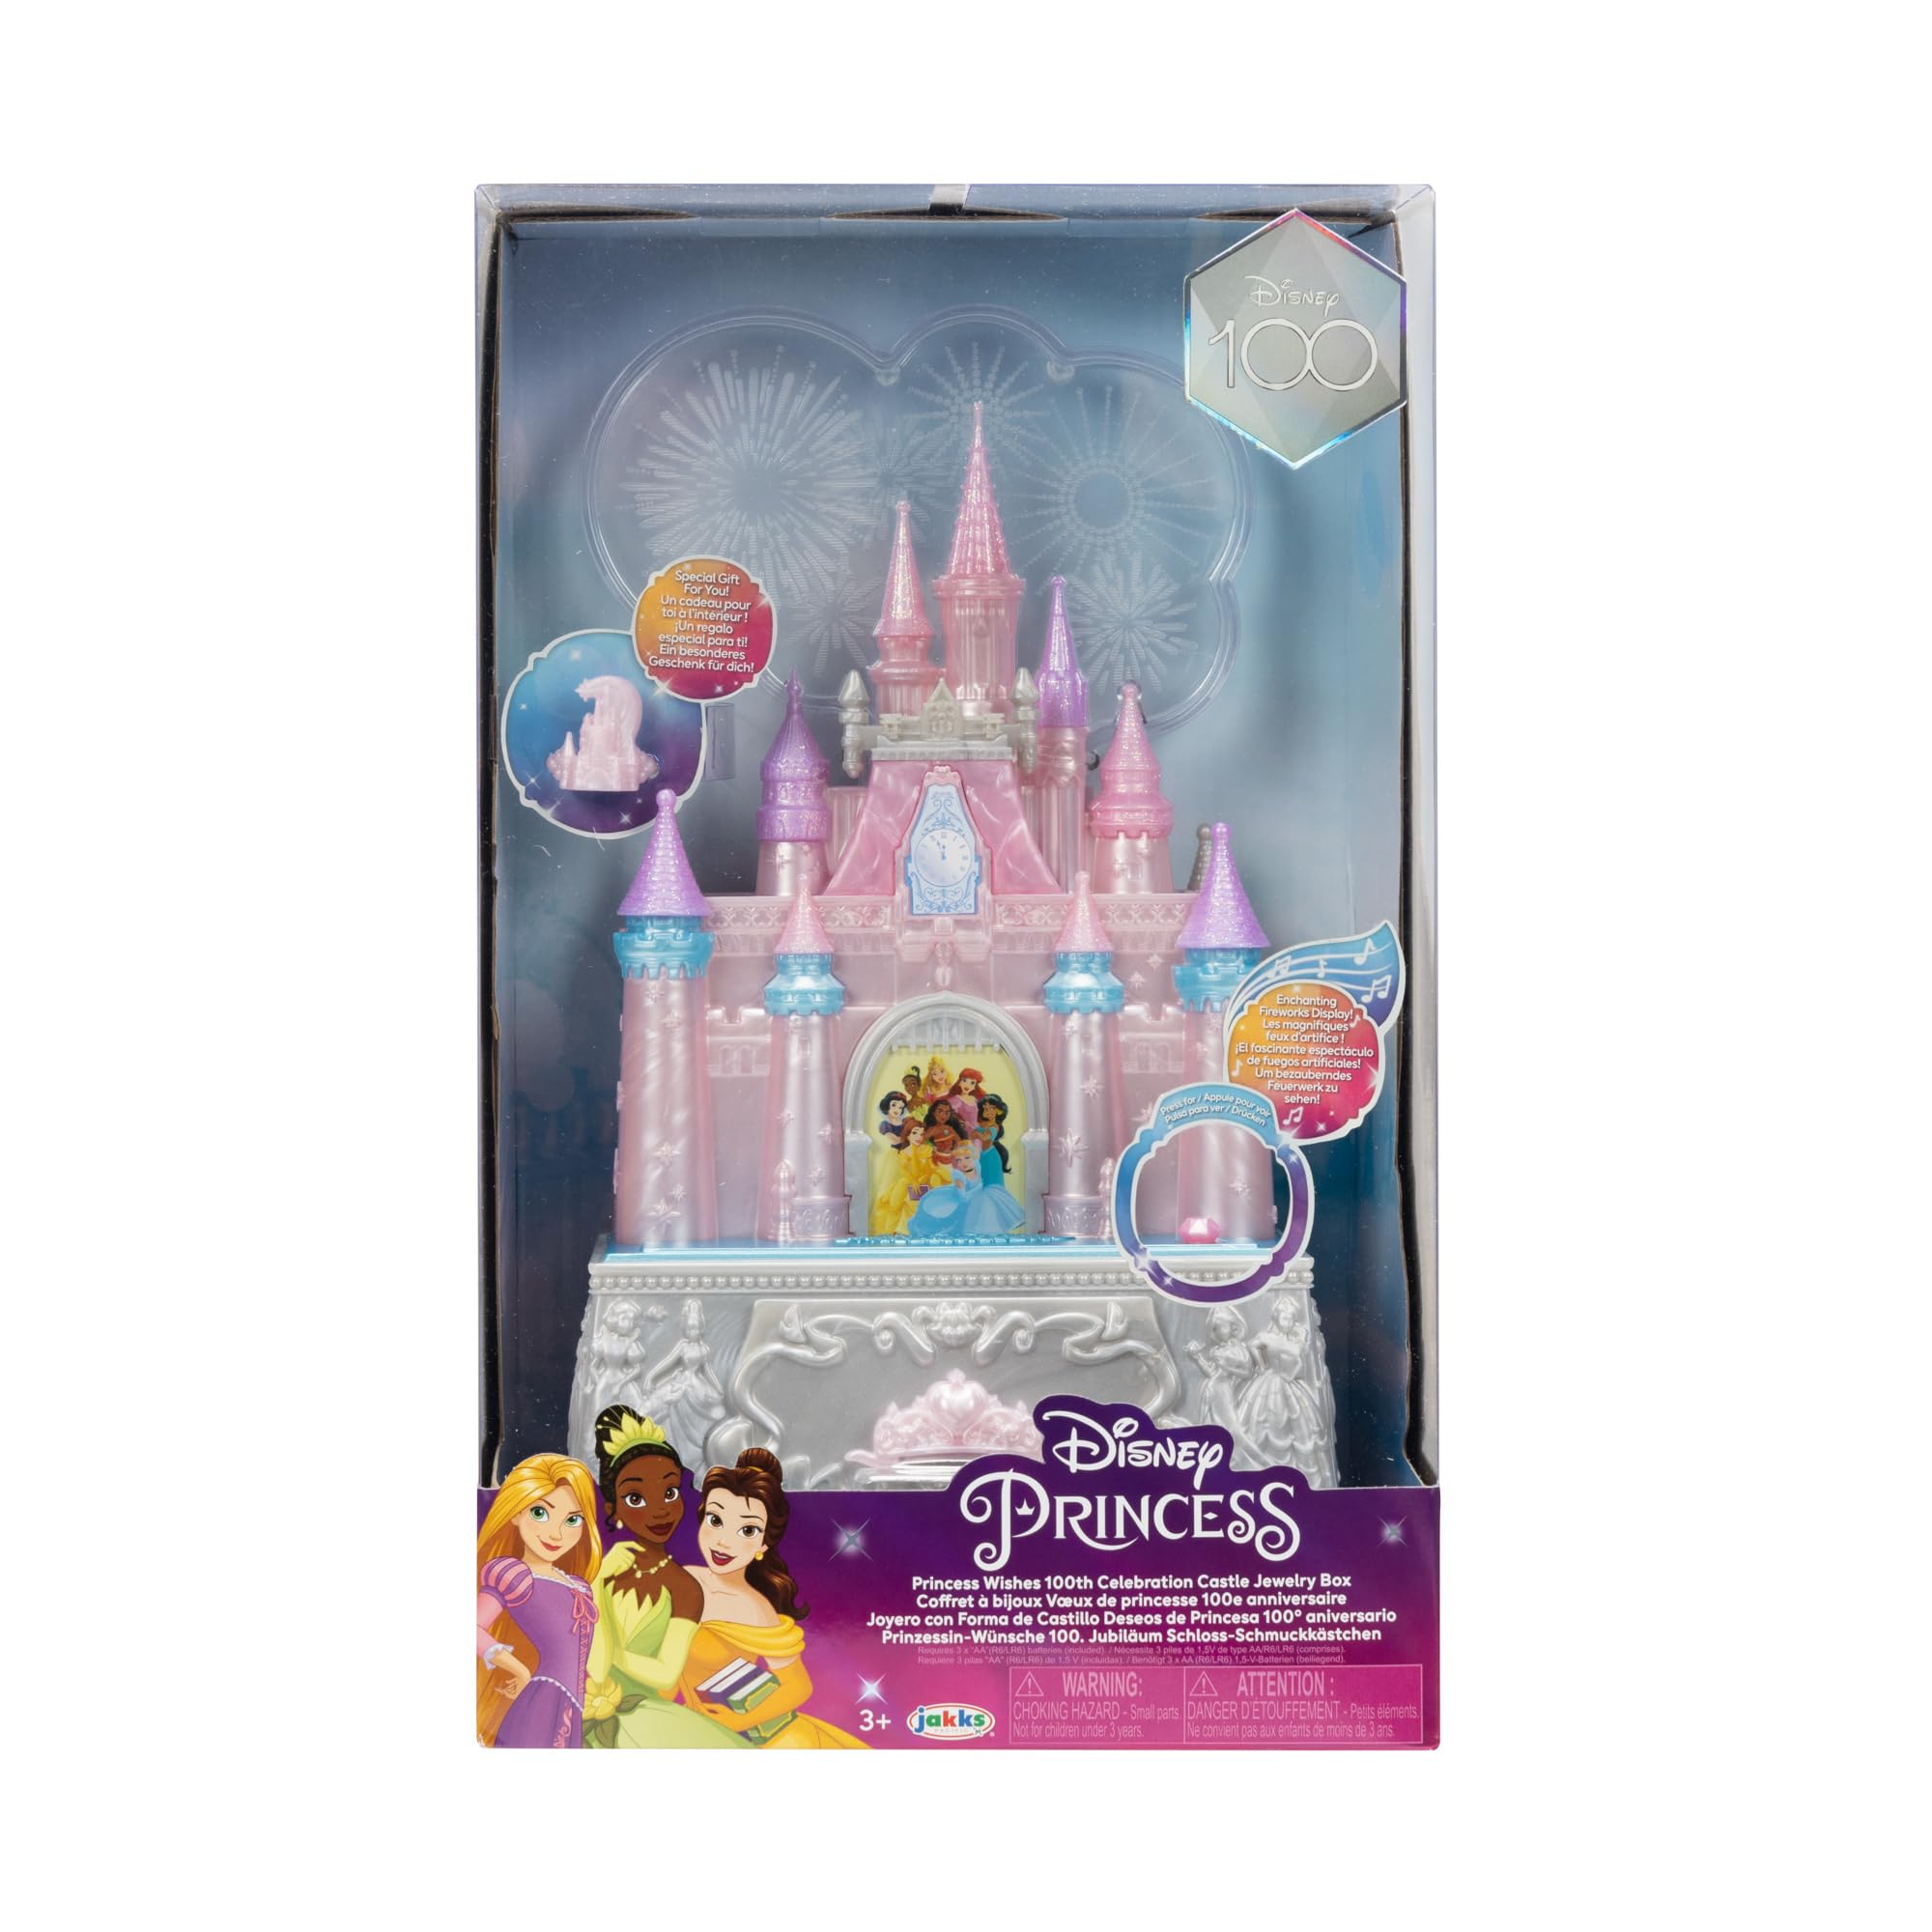 Disney Princess 100th Anniversary Celebration Castle Jewelry Box